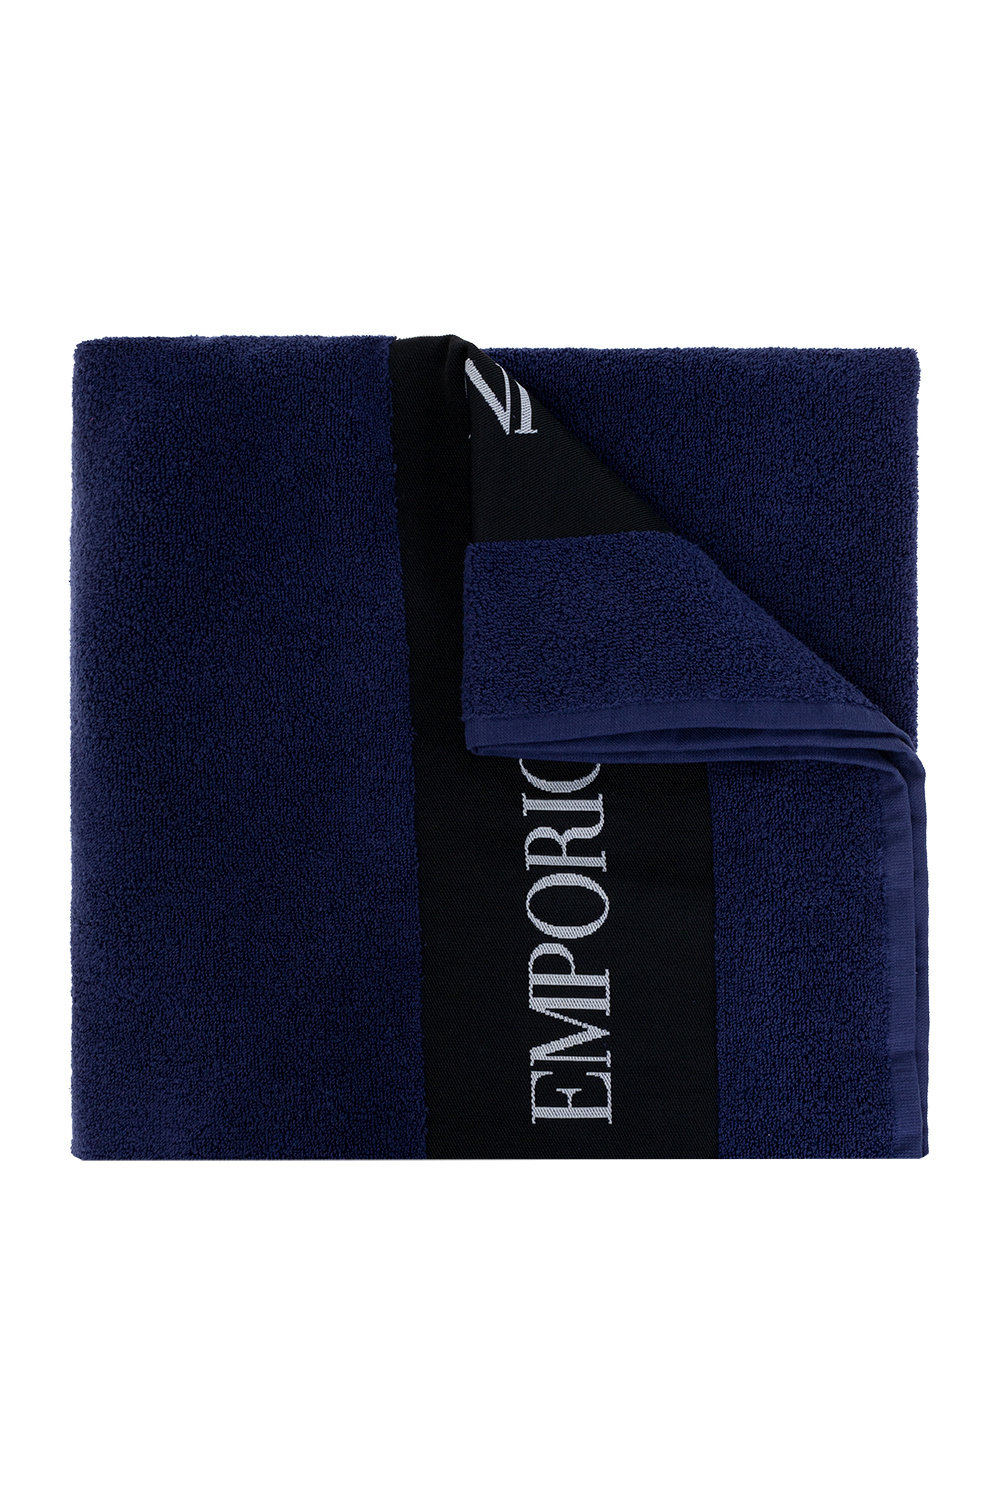 Giorgio Armani Beauty - Bath towel with logo Emporio Armani - IetpShops  Seychelles